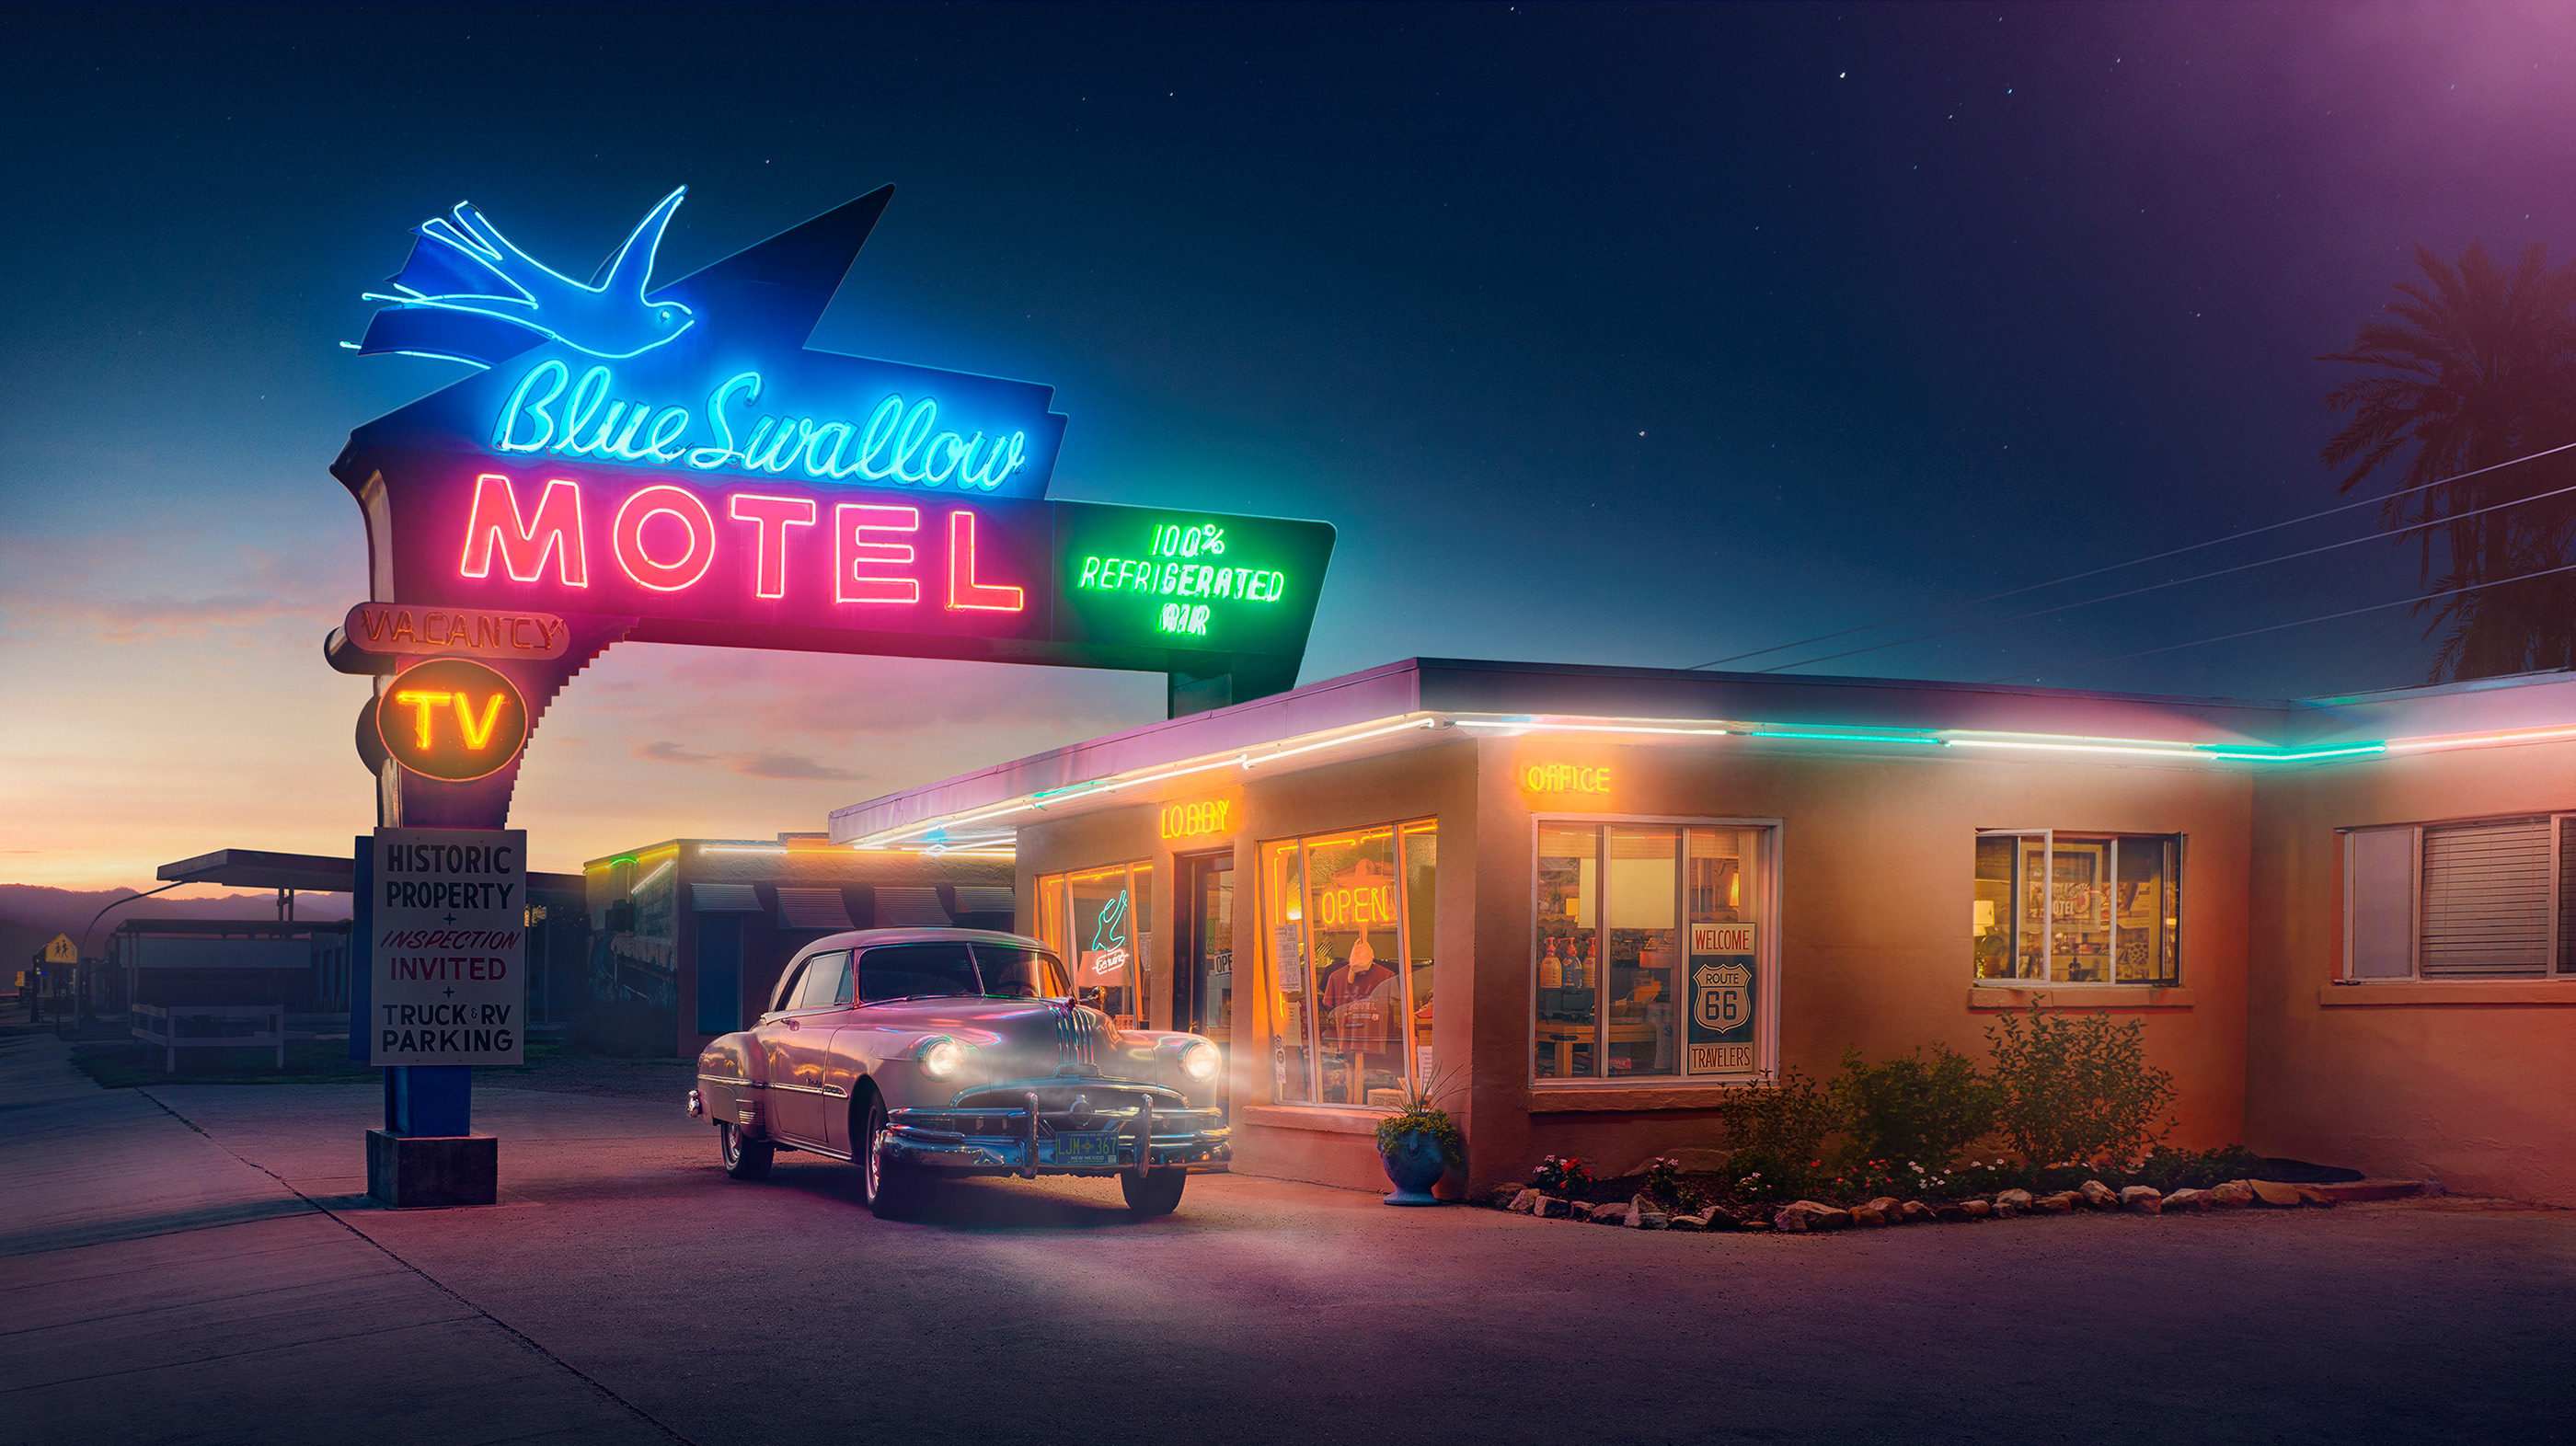 General 2800x1572 car old car neon vintage Chevrolet Chevrolet Bel Air headlight beams motel hotel starry night night